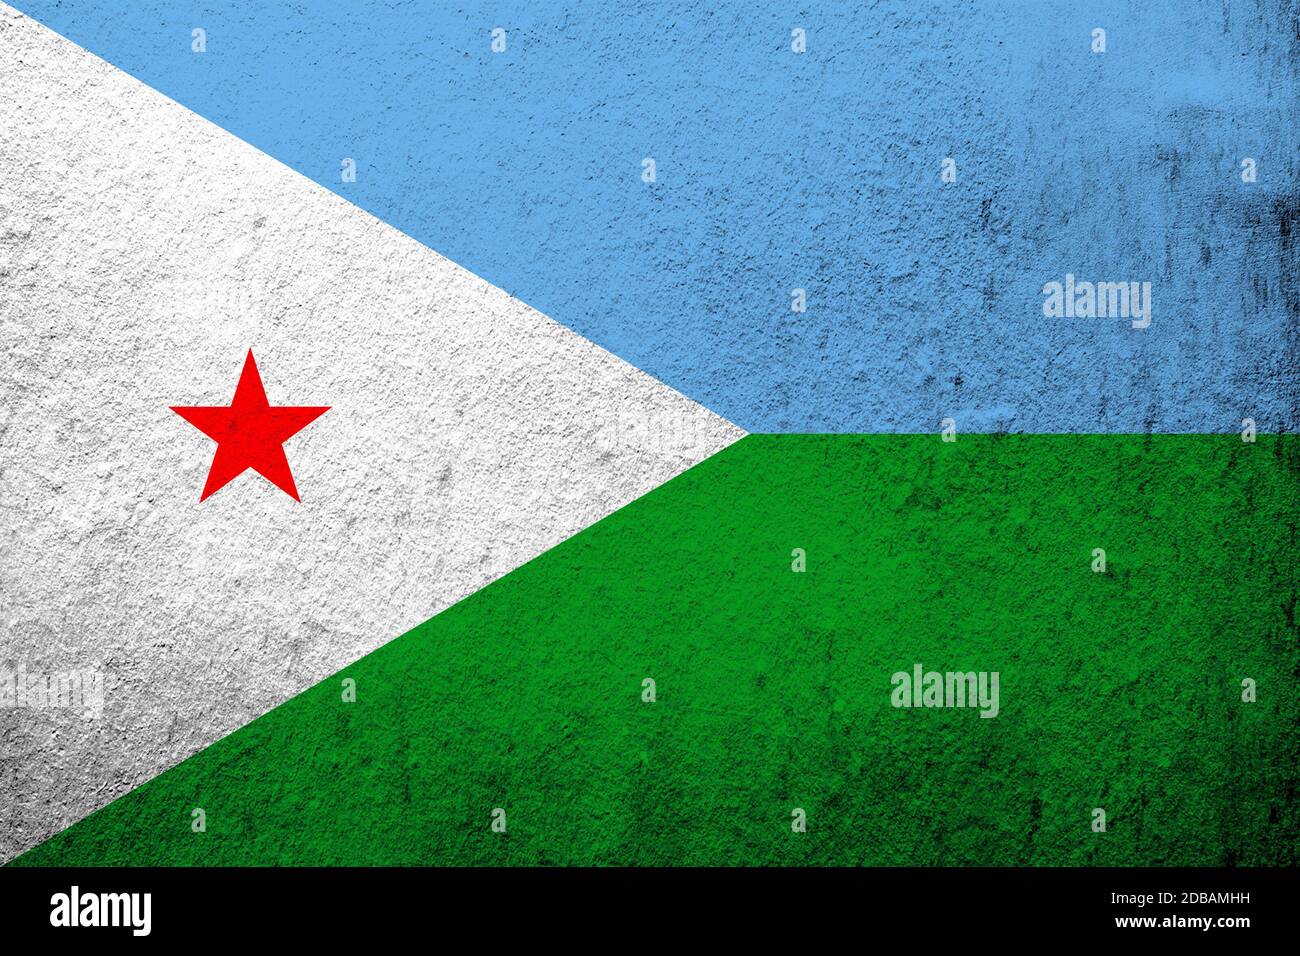 the Republic of Djibouti National flag. Grunge background Stock Photo